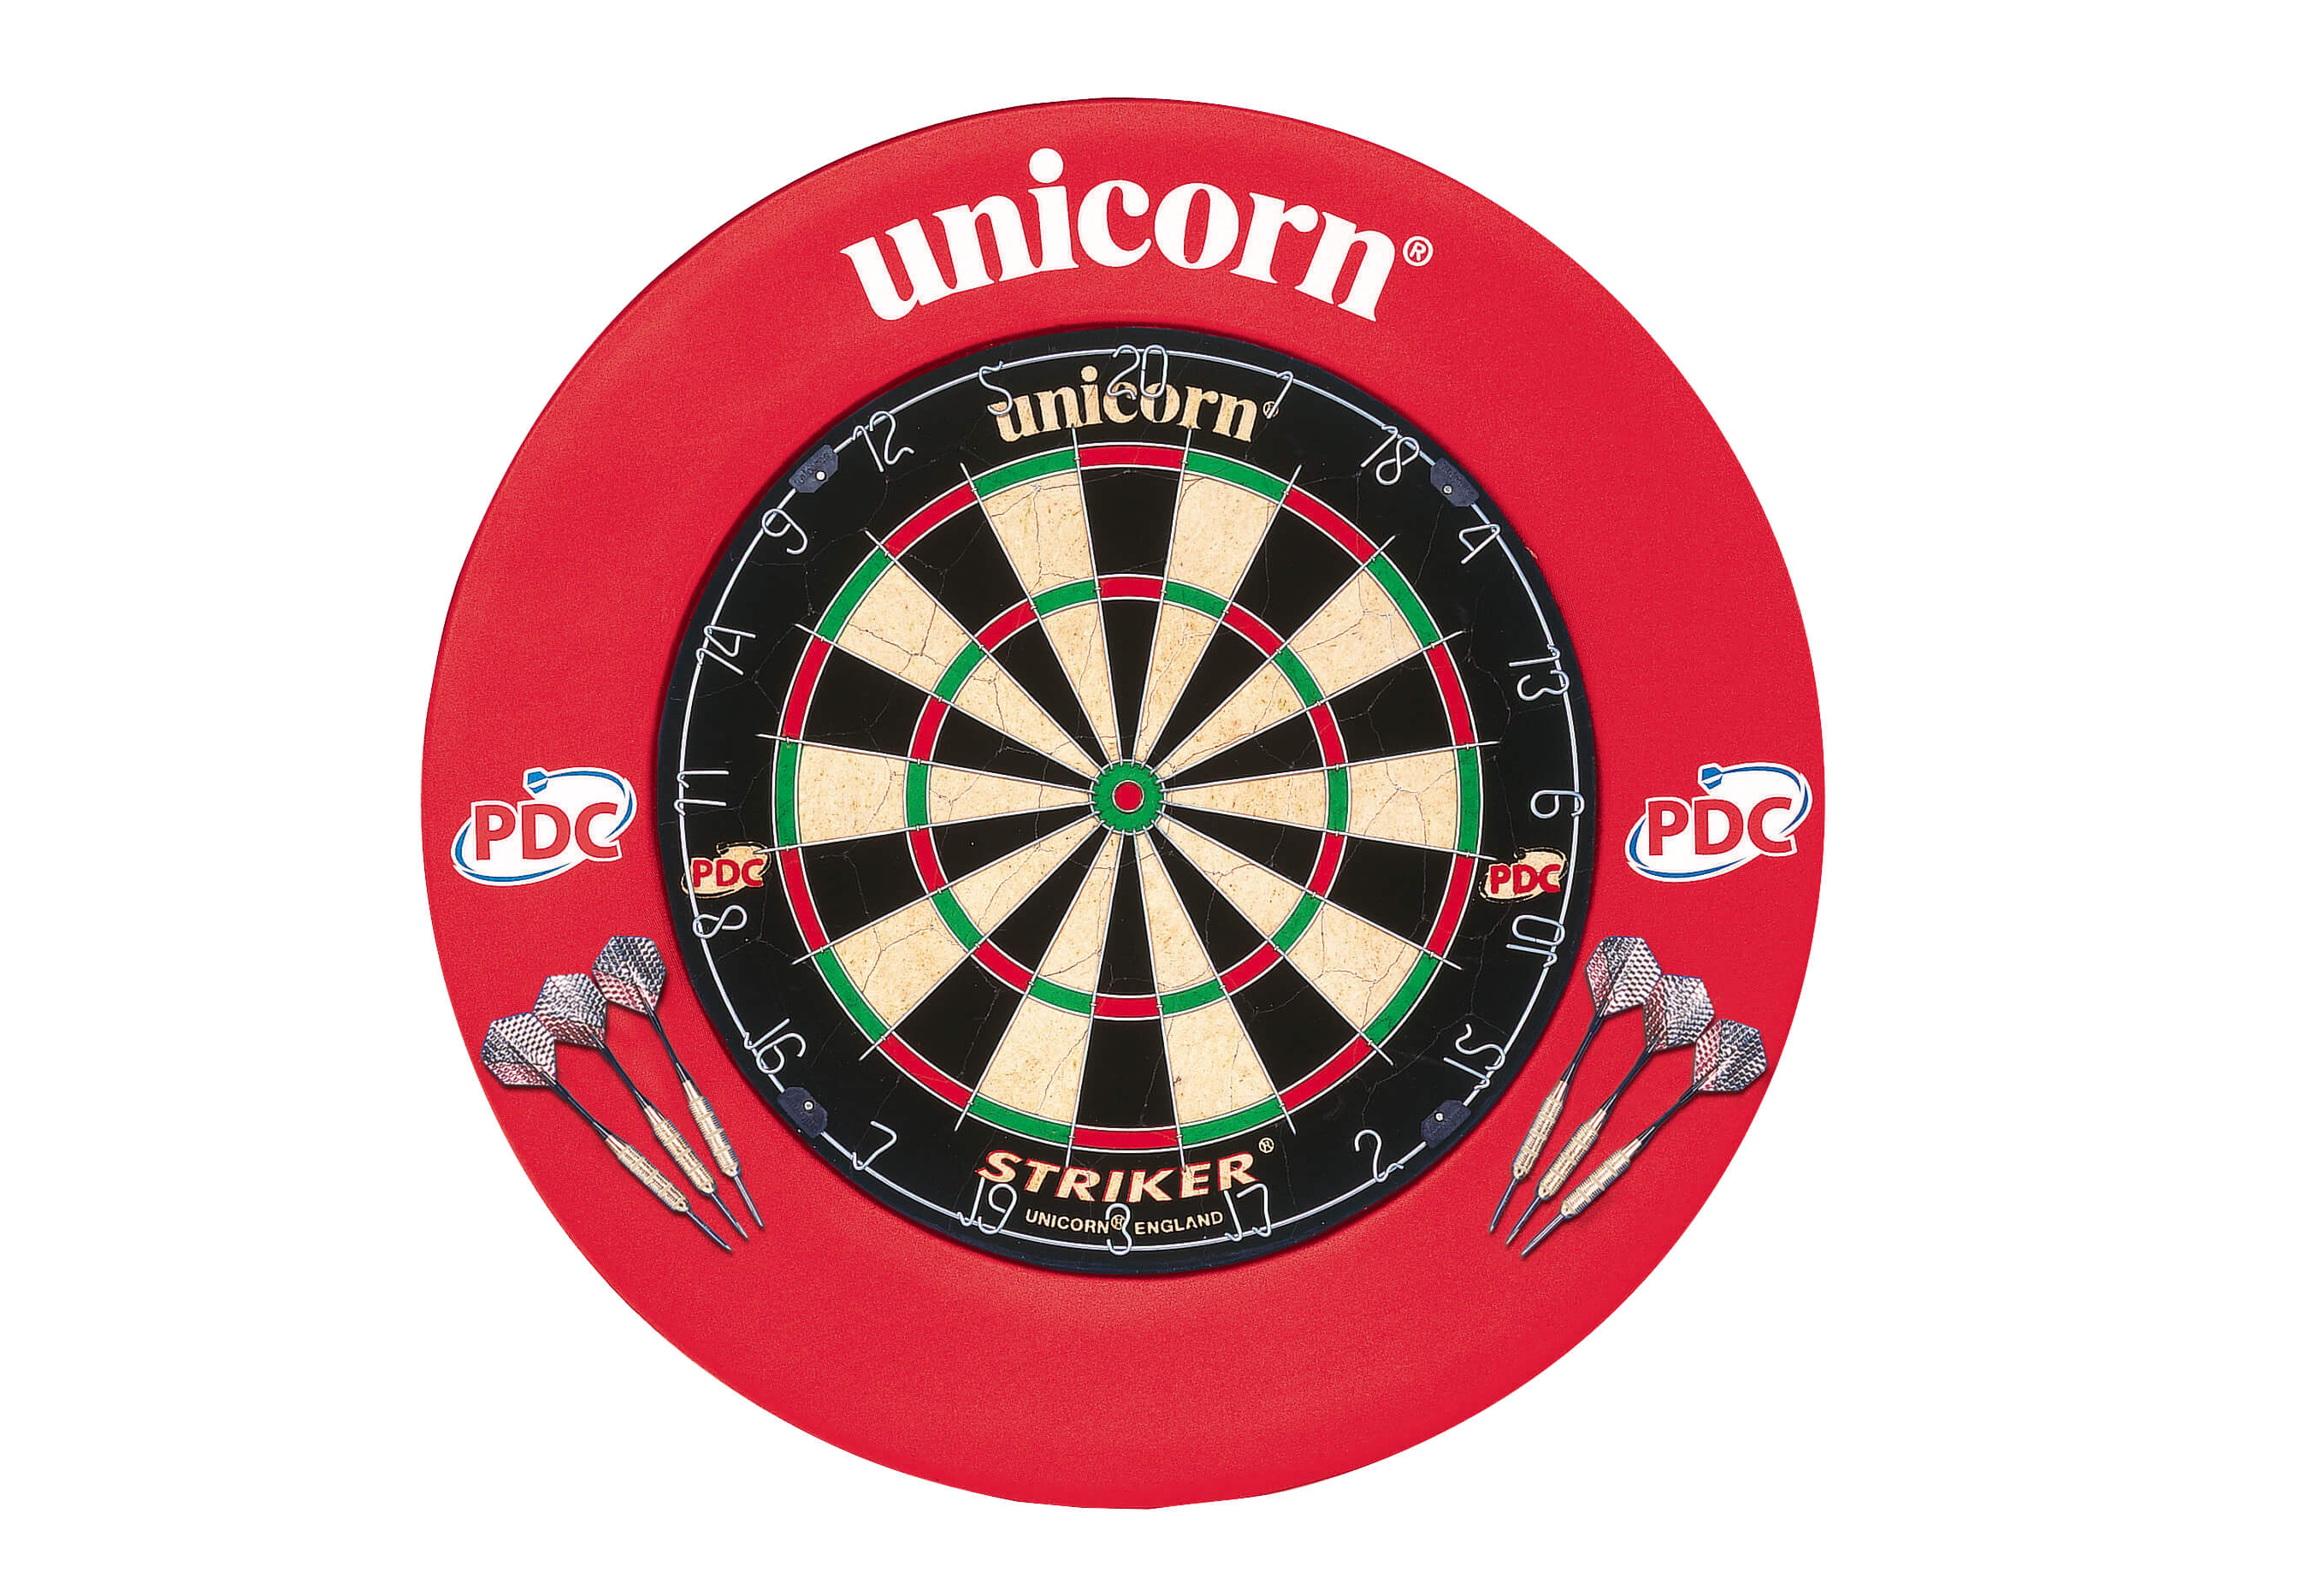 Unicorn Striker With Surround Dartboard